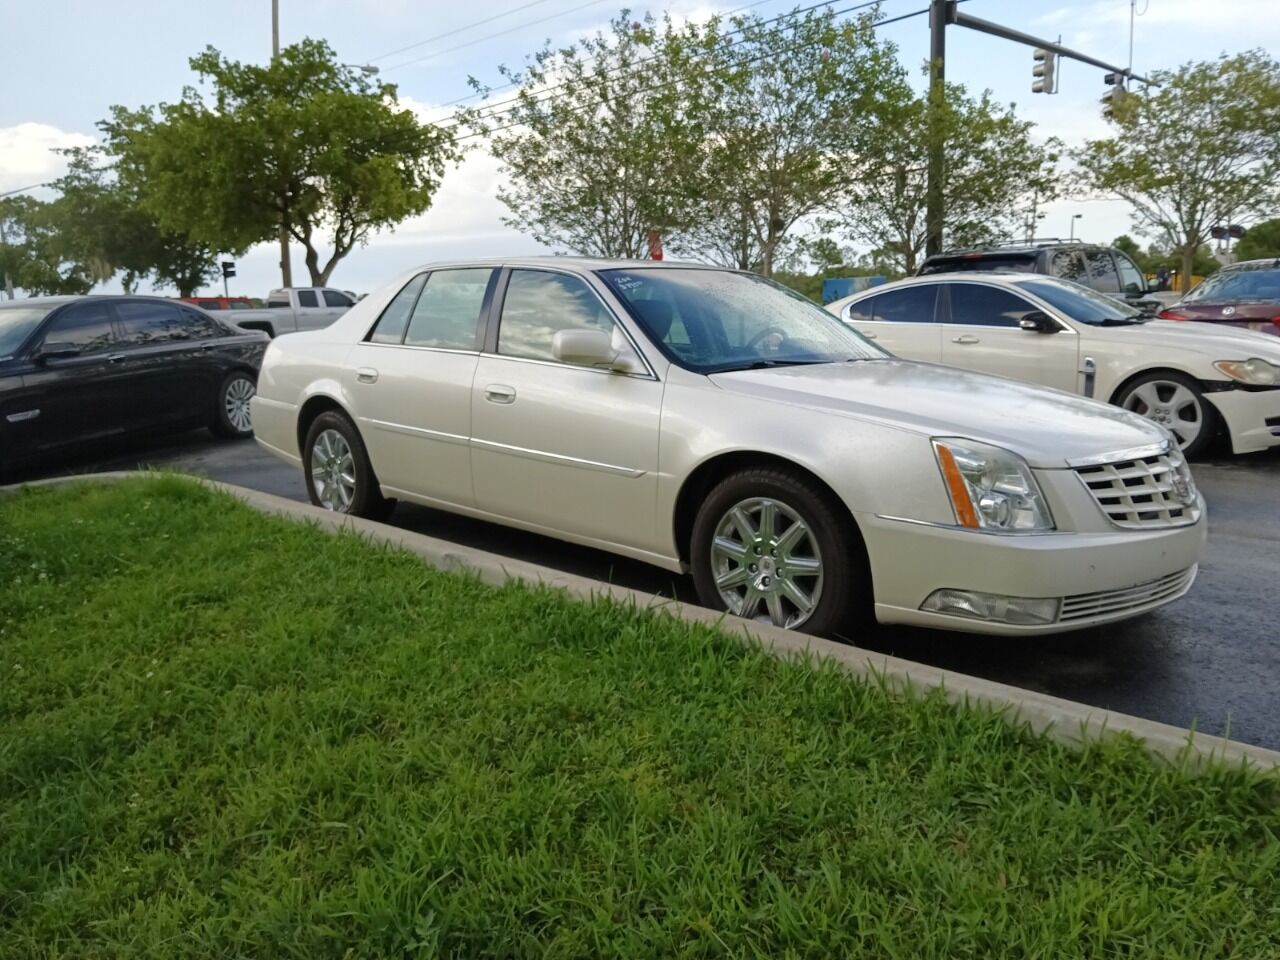 2011 Cadillac DTS Sedan - $7,950